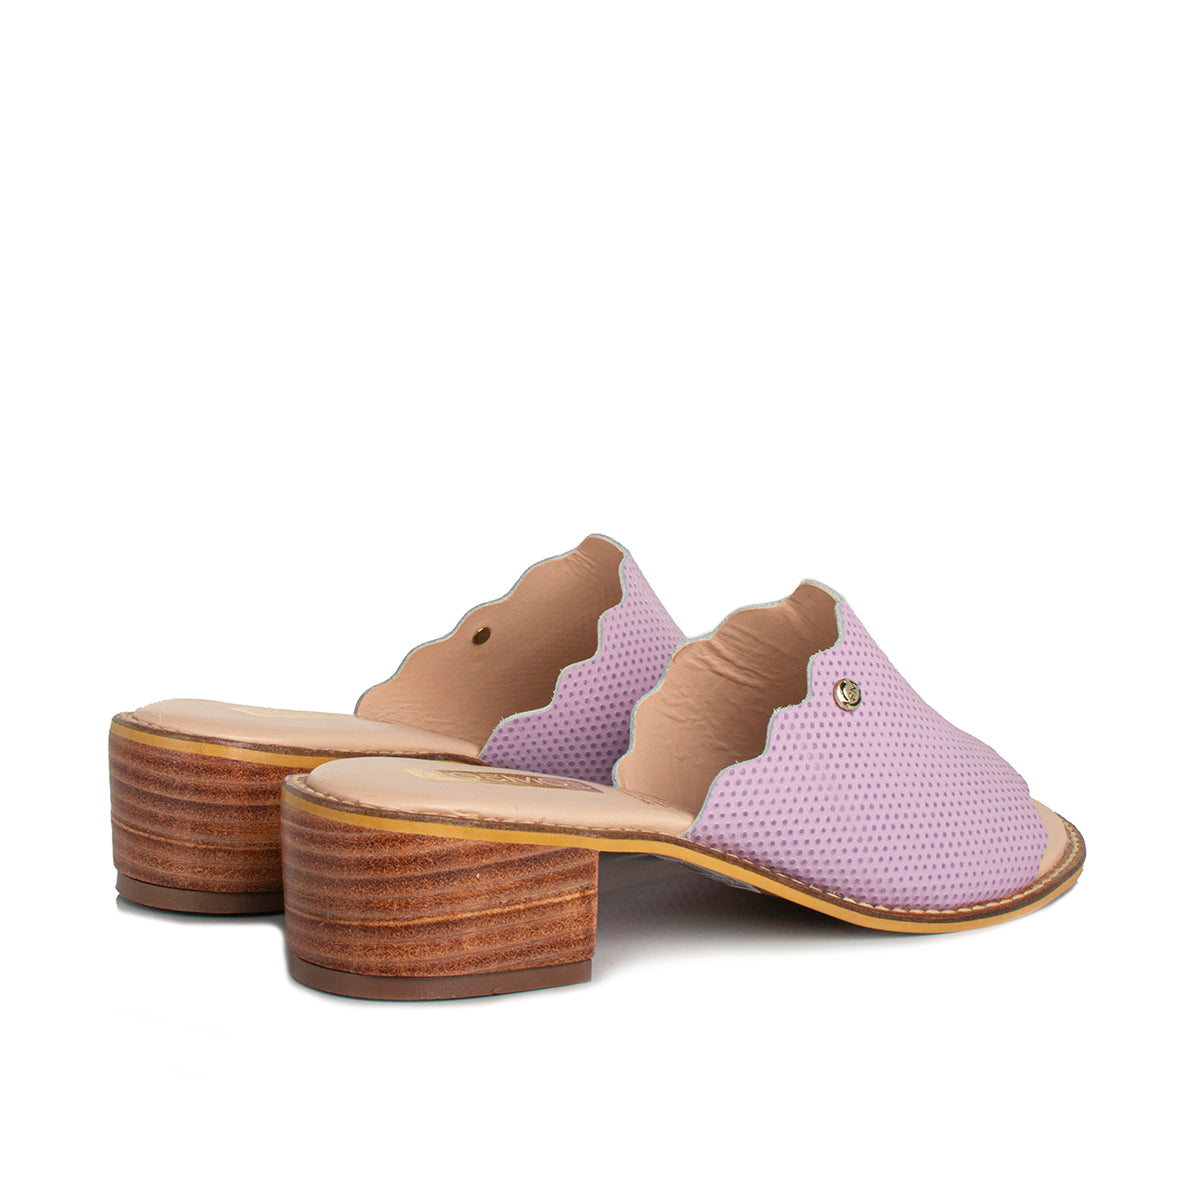 Sandalia de cuero color lila, para dama